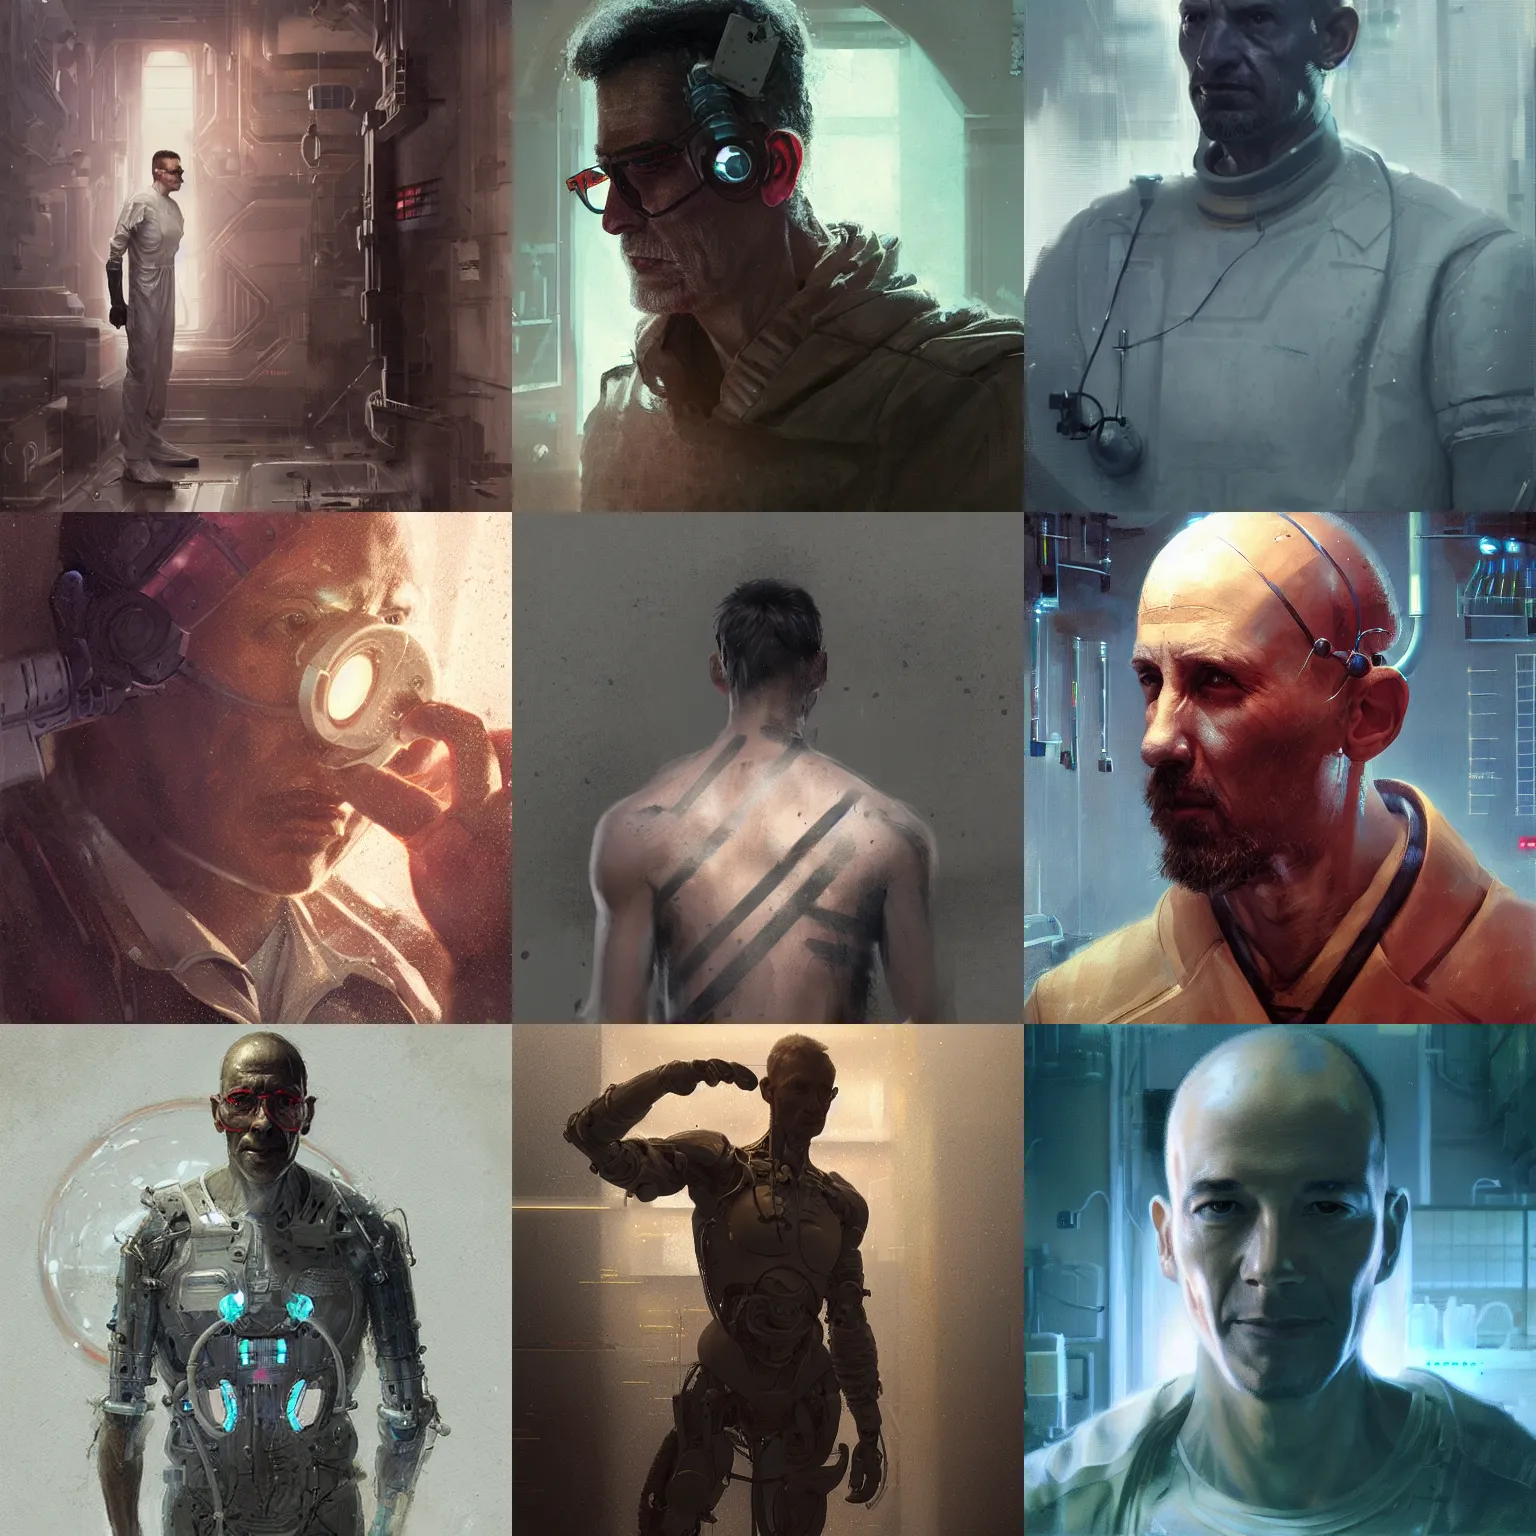 Prompt: a laboratory technician man with cybernetic implants, scifi character portrait by greg rutkowski, craig mullins, cinematic lighting, dystopian scifi gear